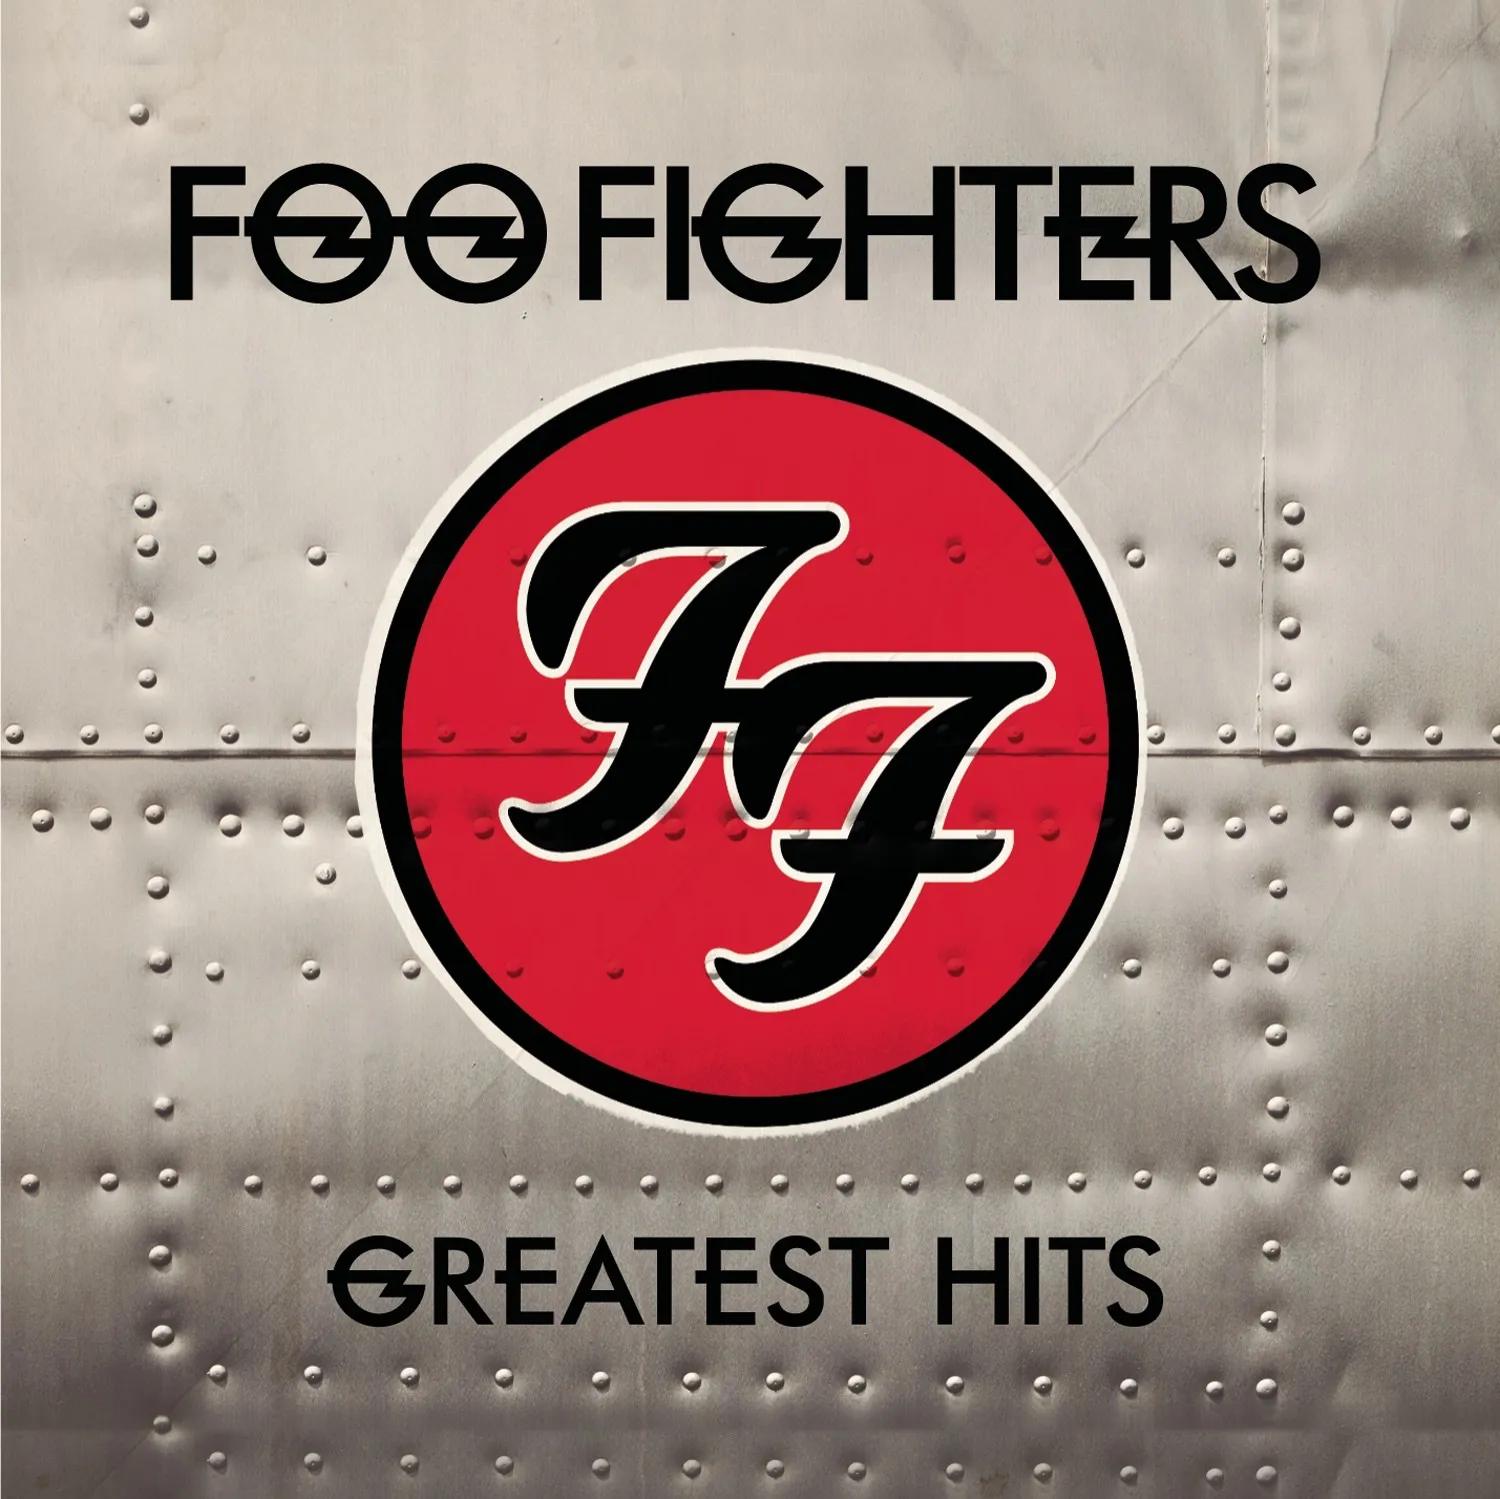 Foo Fighters - Greatest Hits artwork